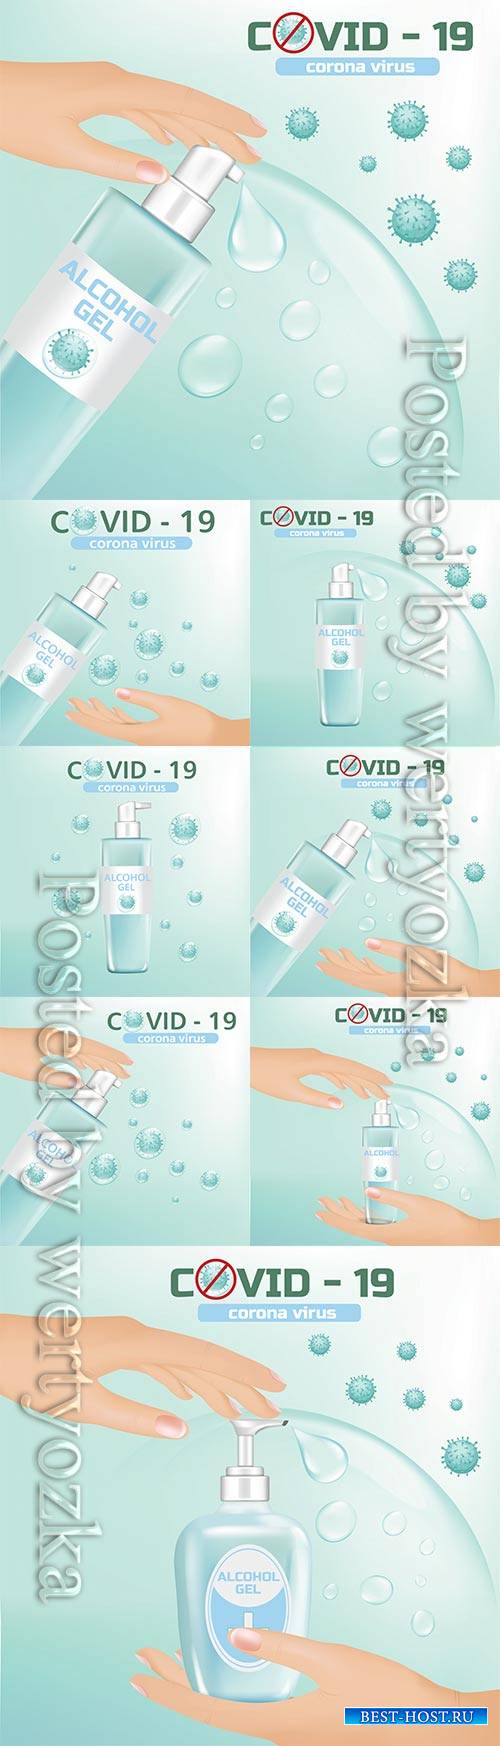 COVID 19, Coranavirus vector illustration sets # 3